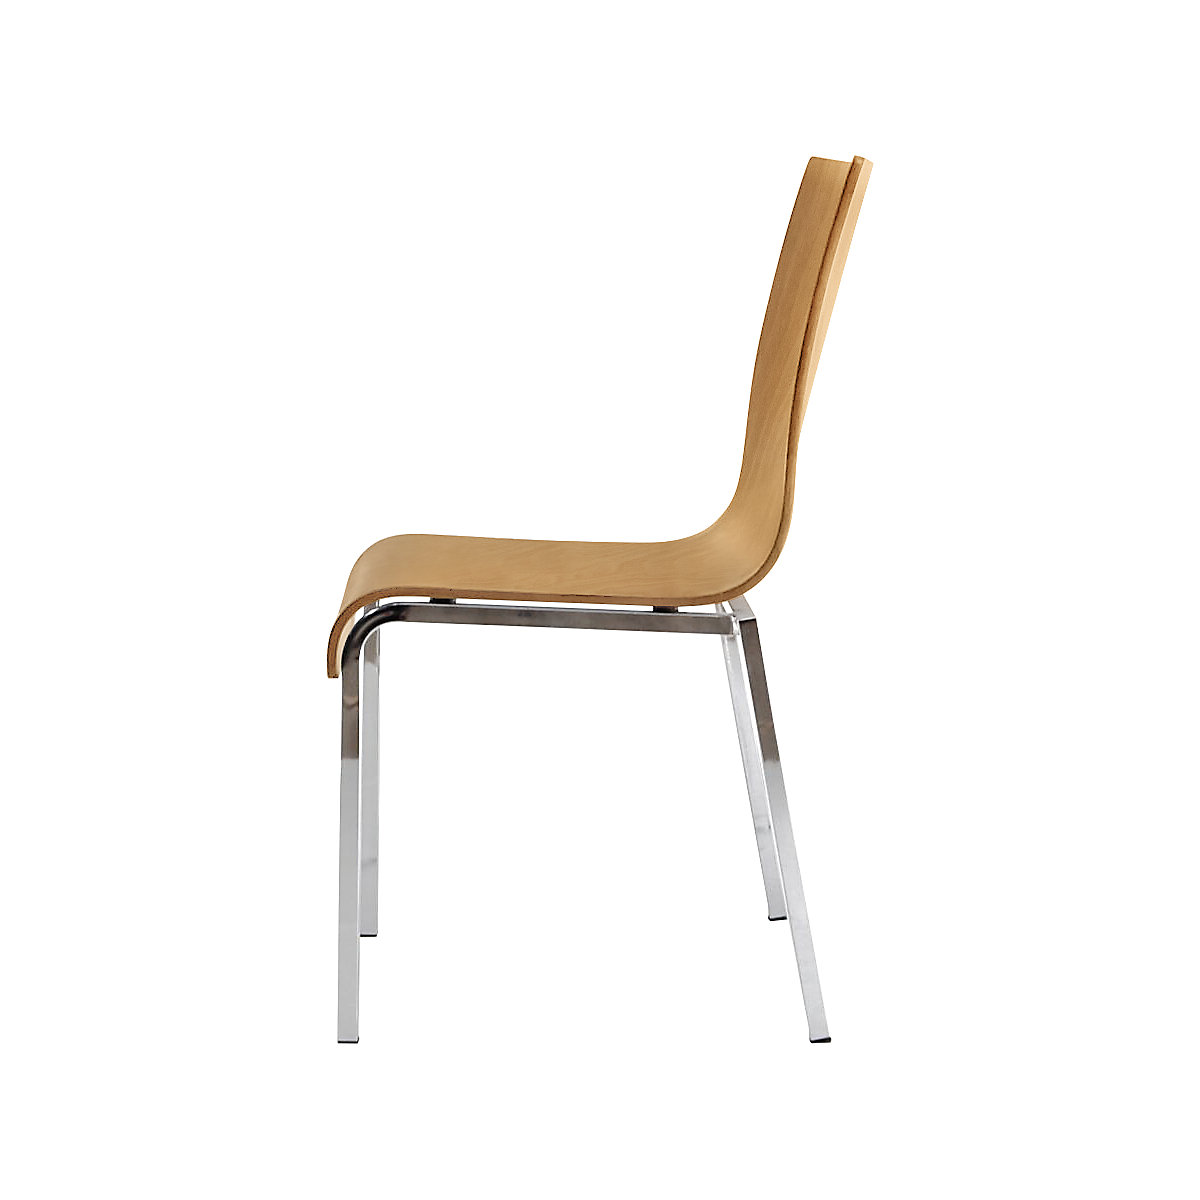 Cadeira de madeira em forma de concha CUBIC, AxLxP 860 x 450 x 520 mm, embalagem de 4 unid., concha faia natural